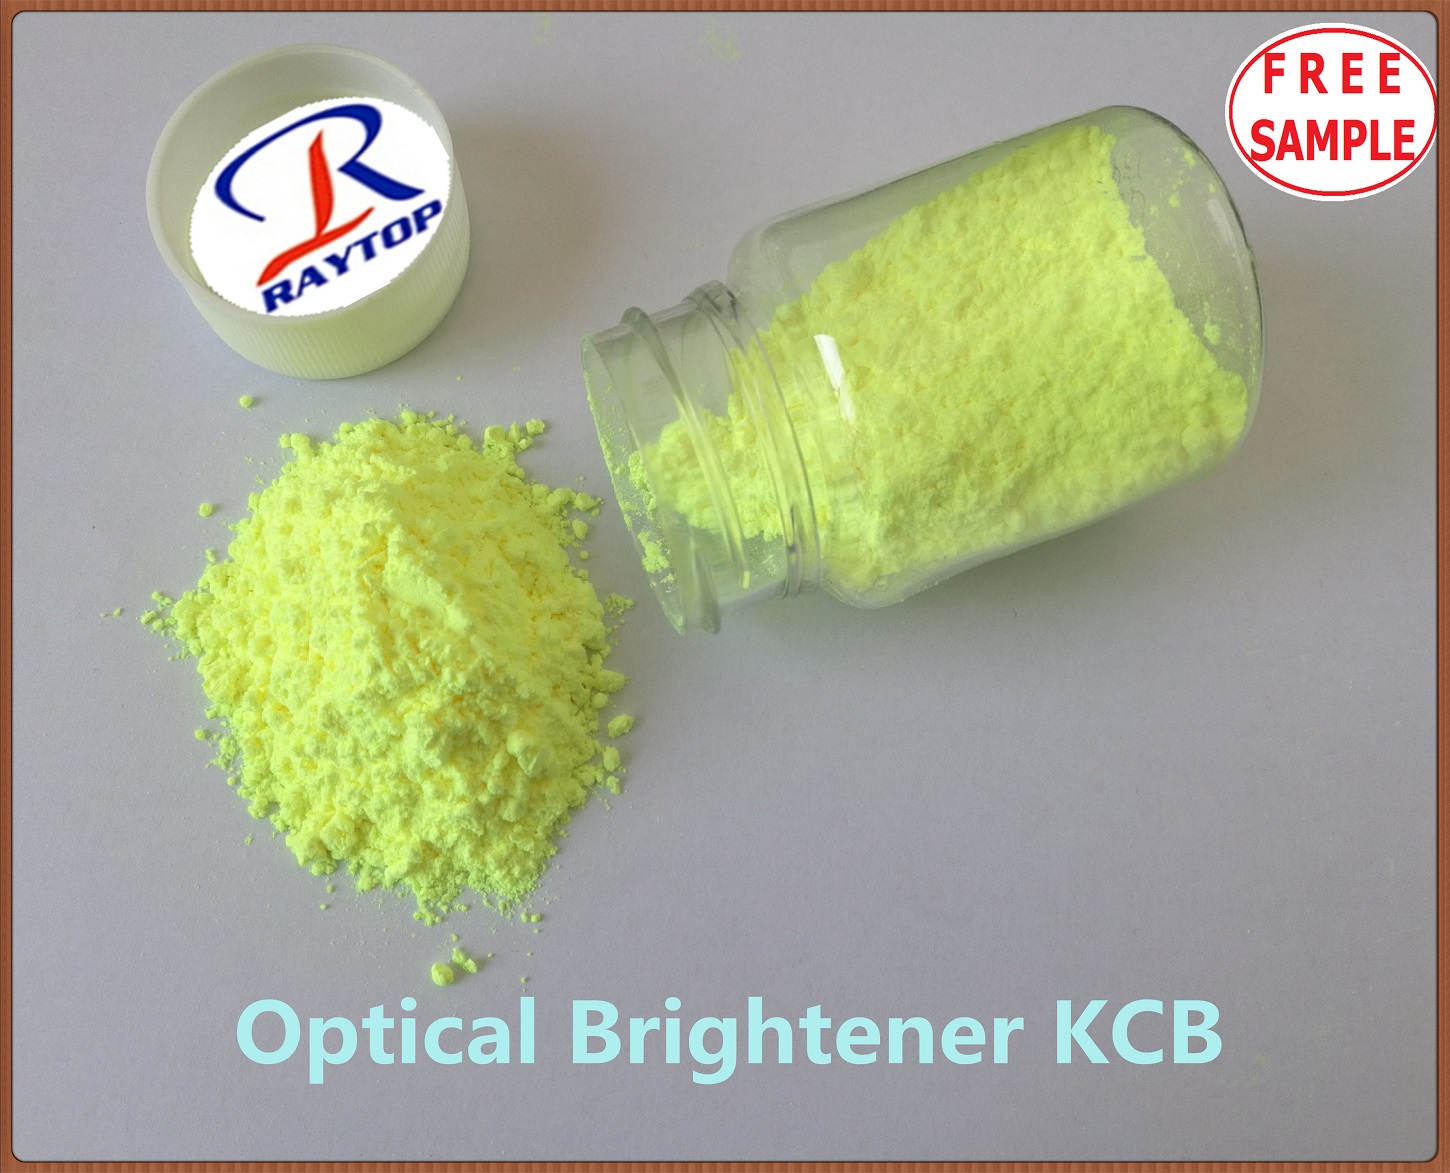 China manufacturer of Optical Brightener KCB for EVA 